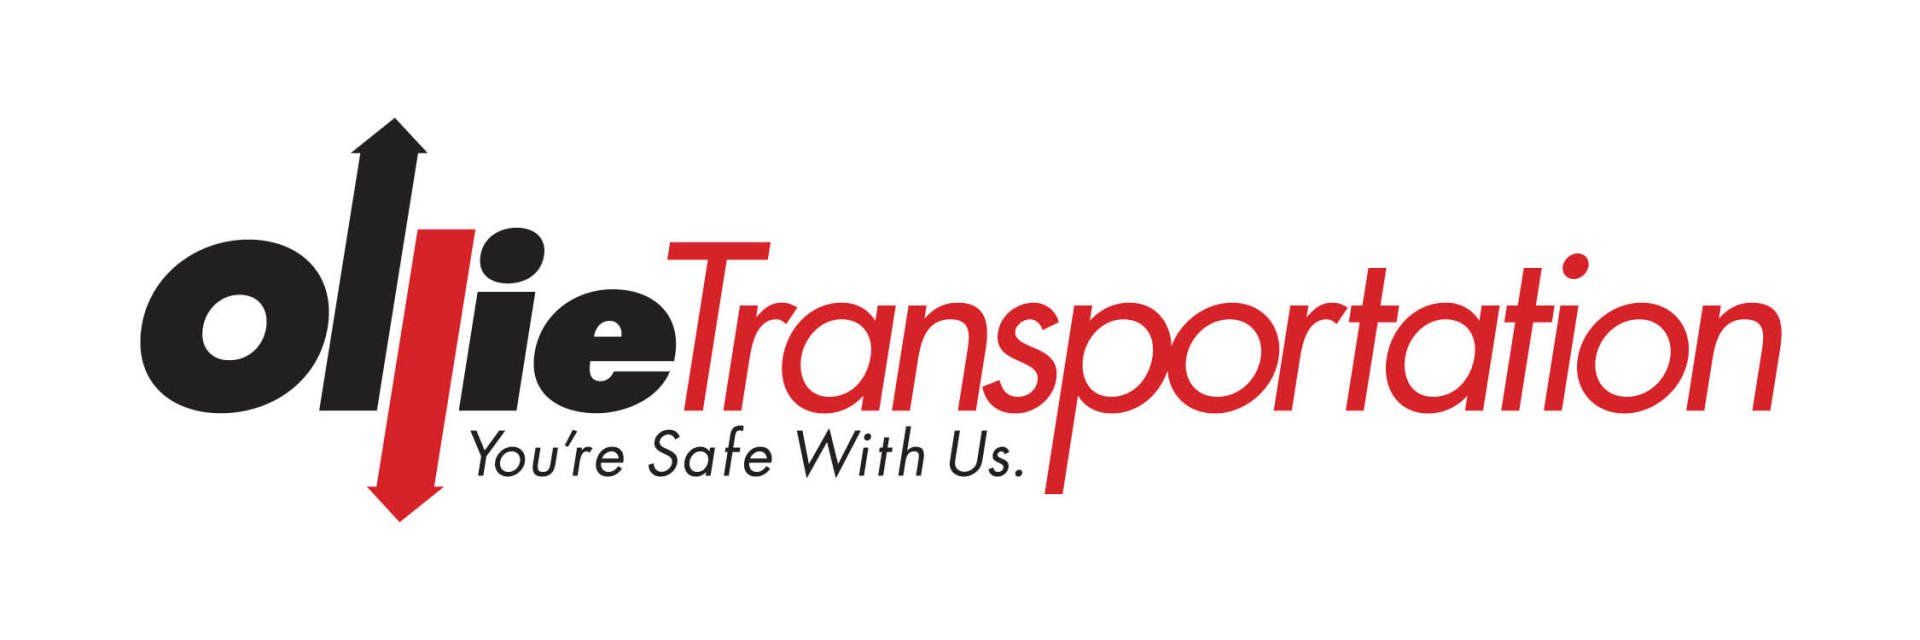 ollie transportation logo